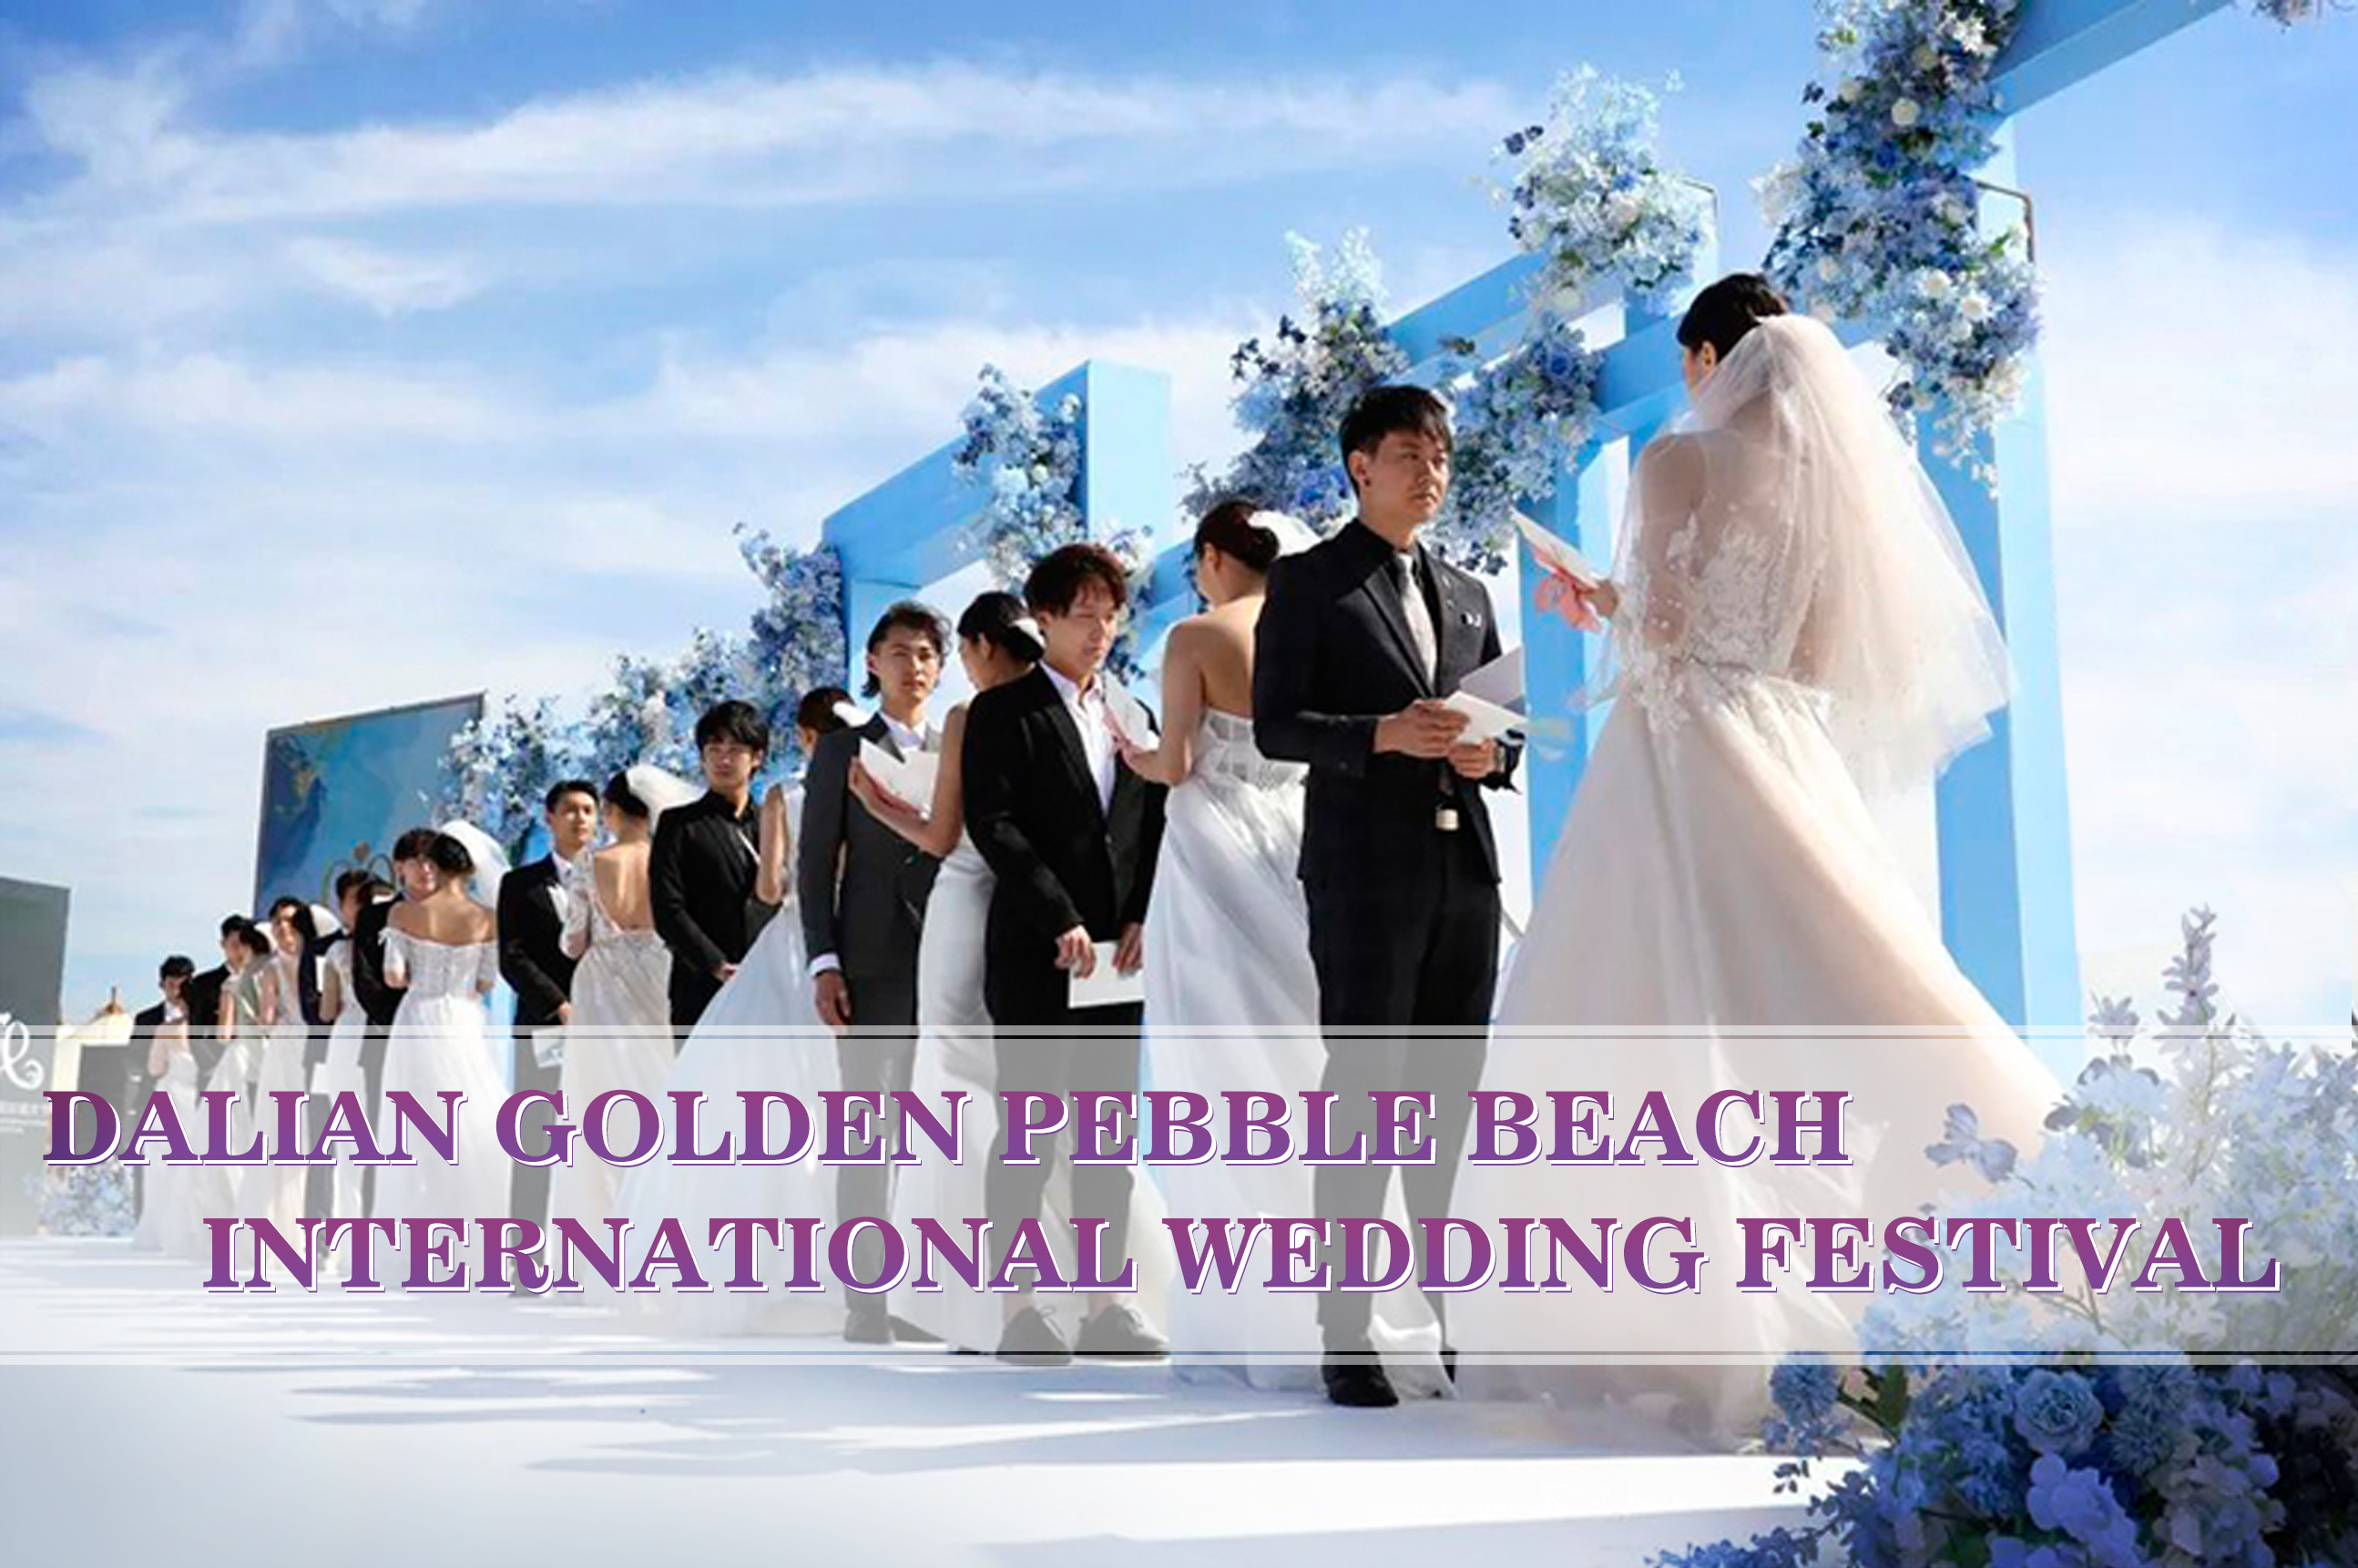 The 2nd Dalian Golden Pebble Beach International Wedding Festival